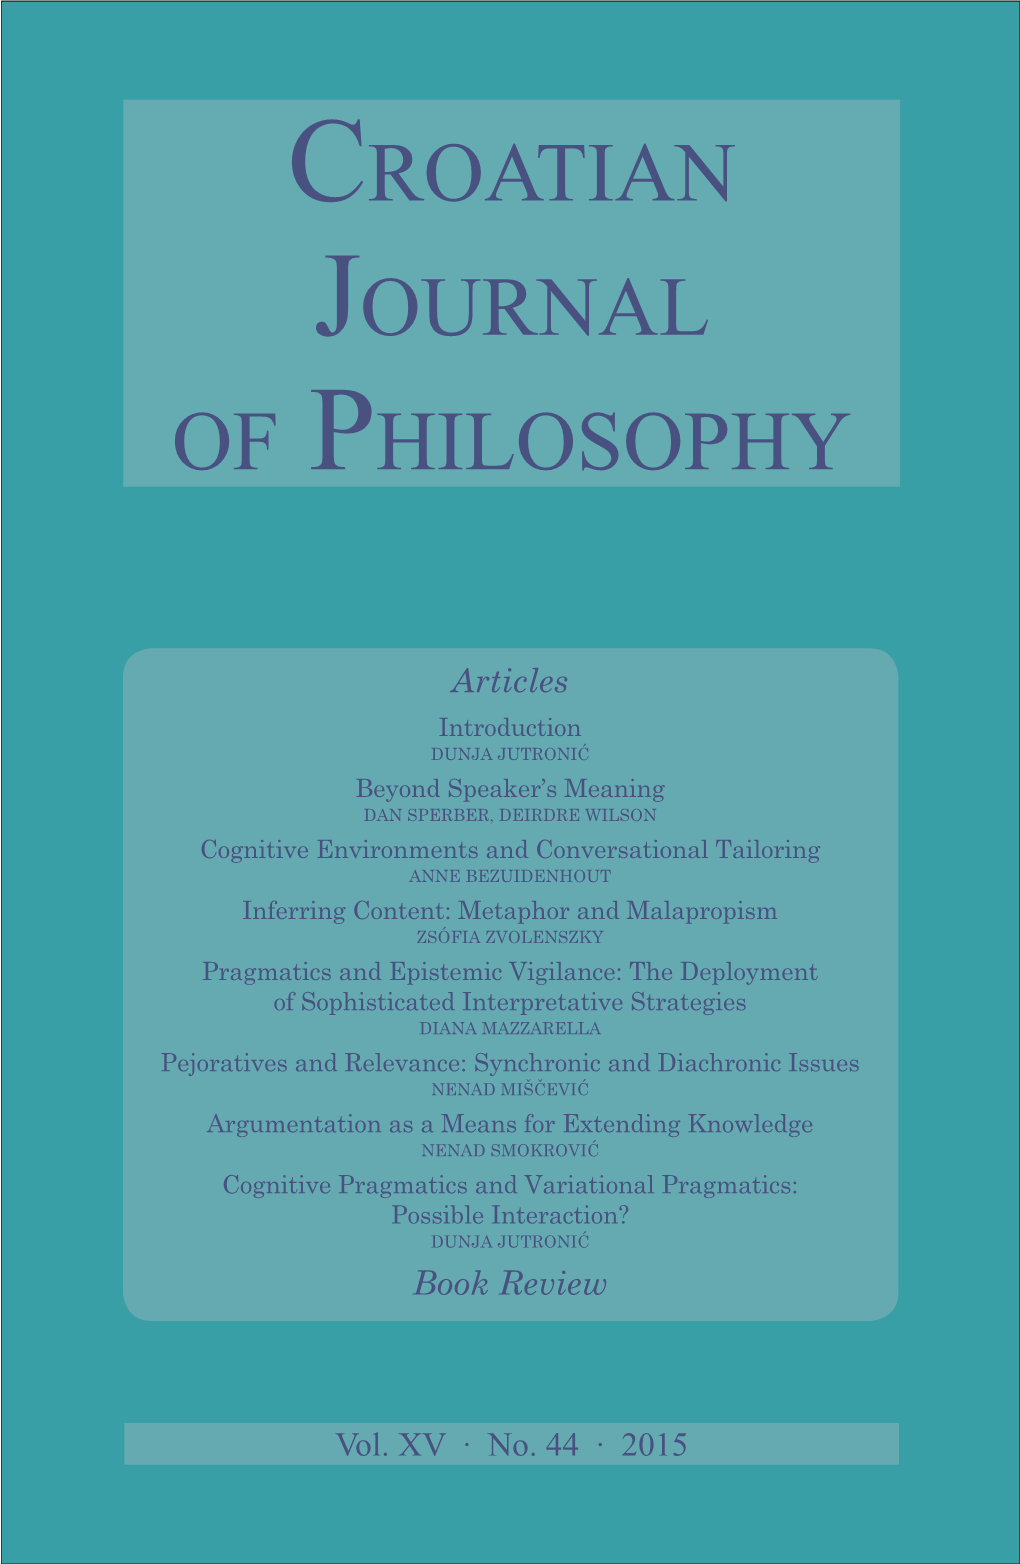 Croatian Journal of Philosophy